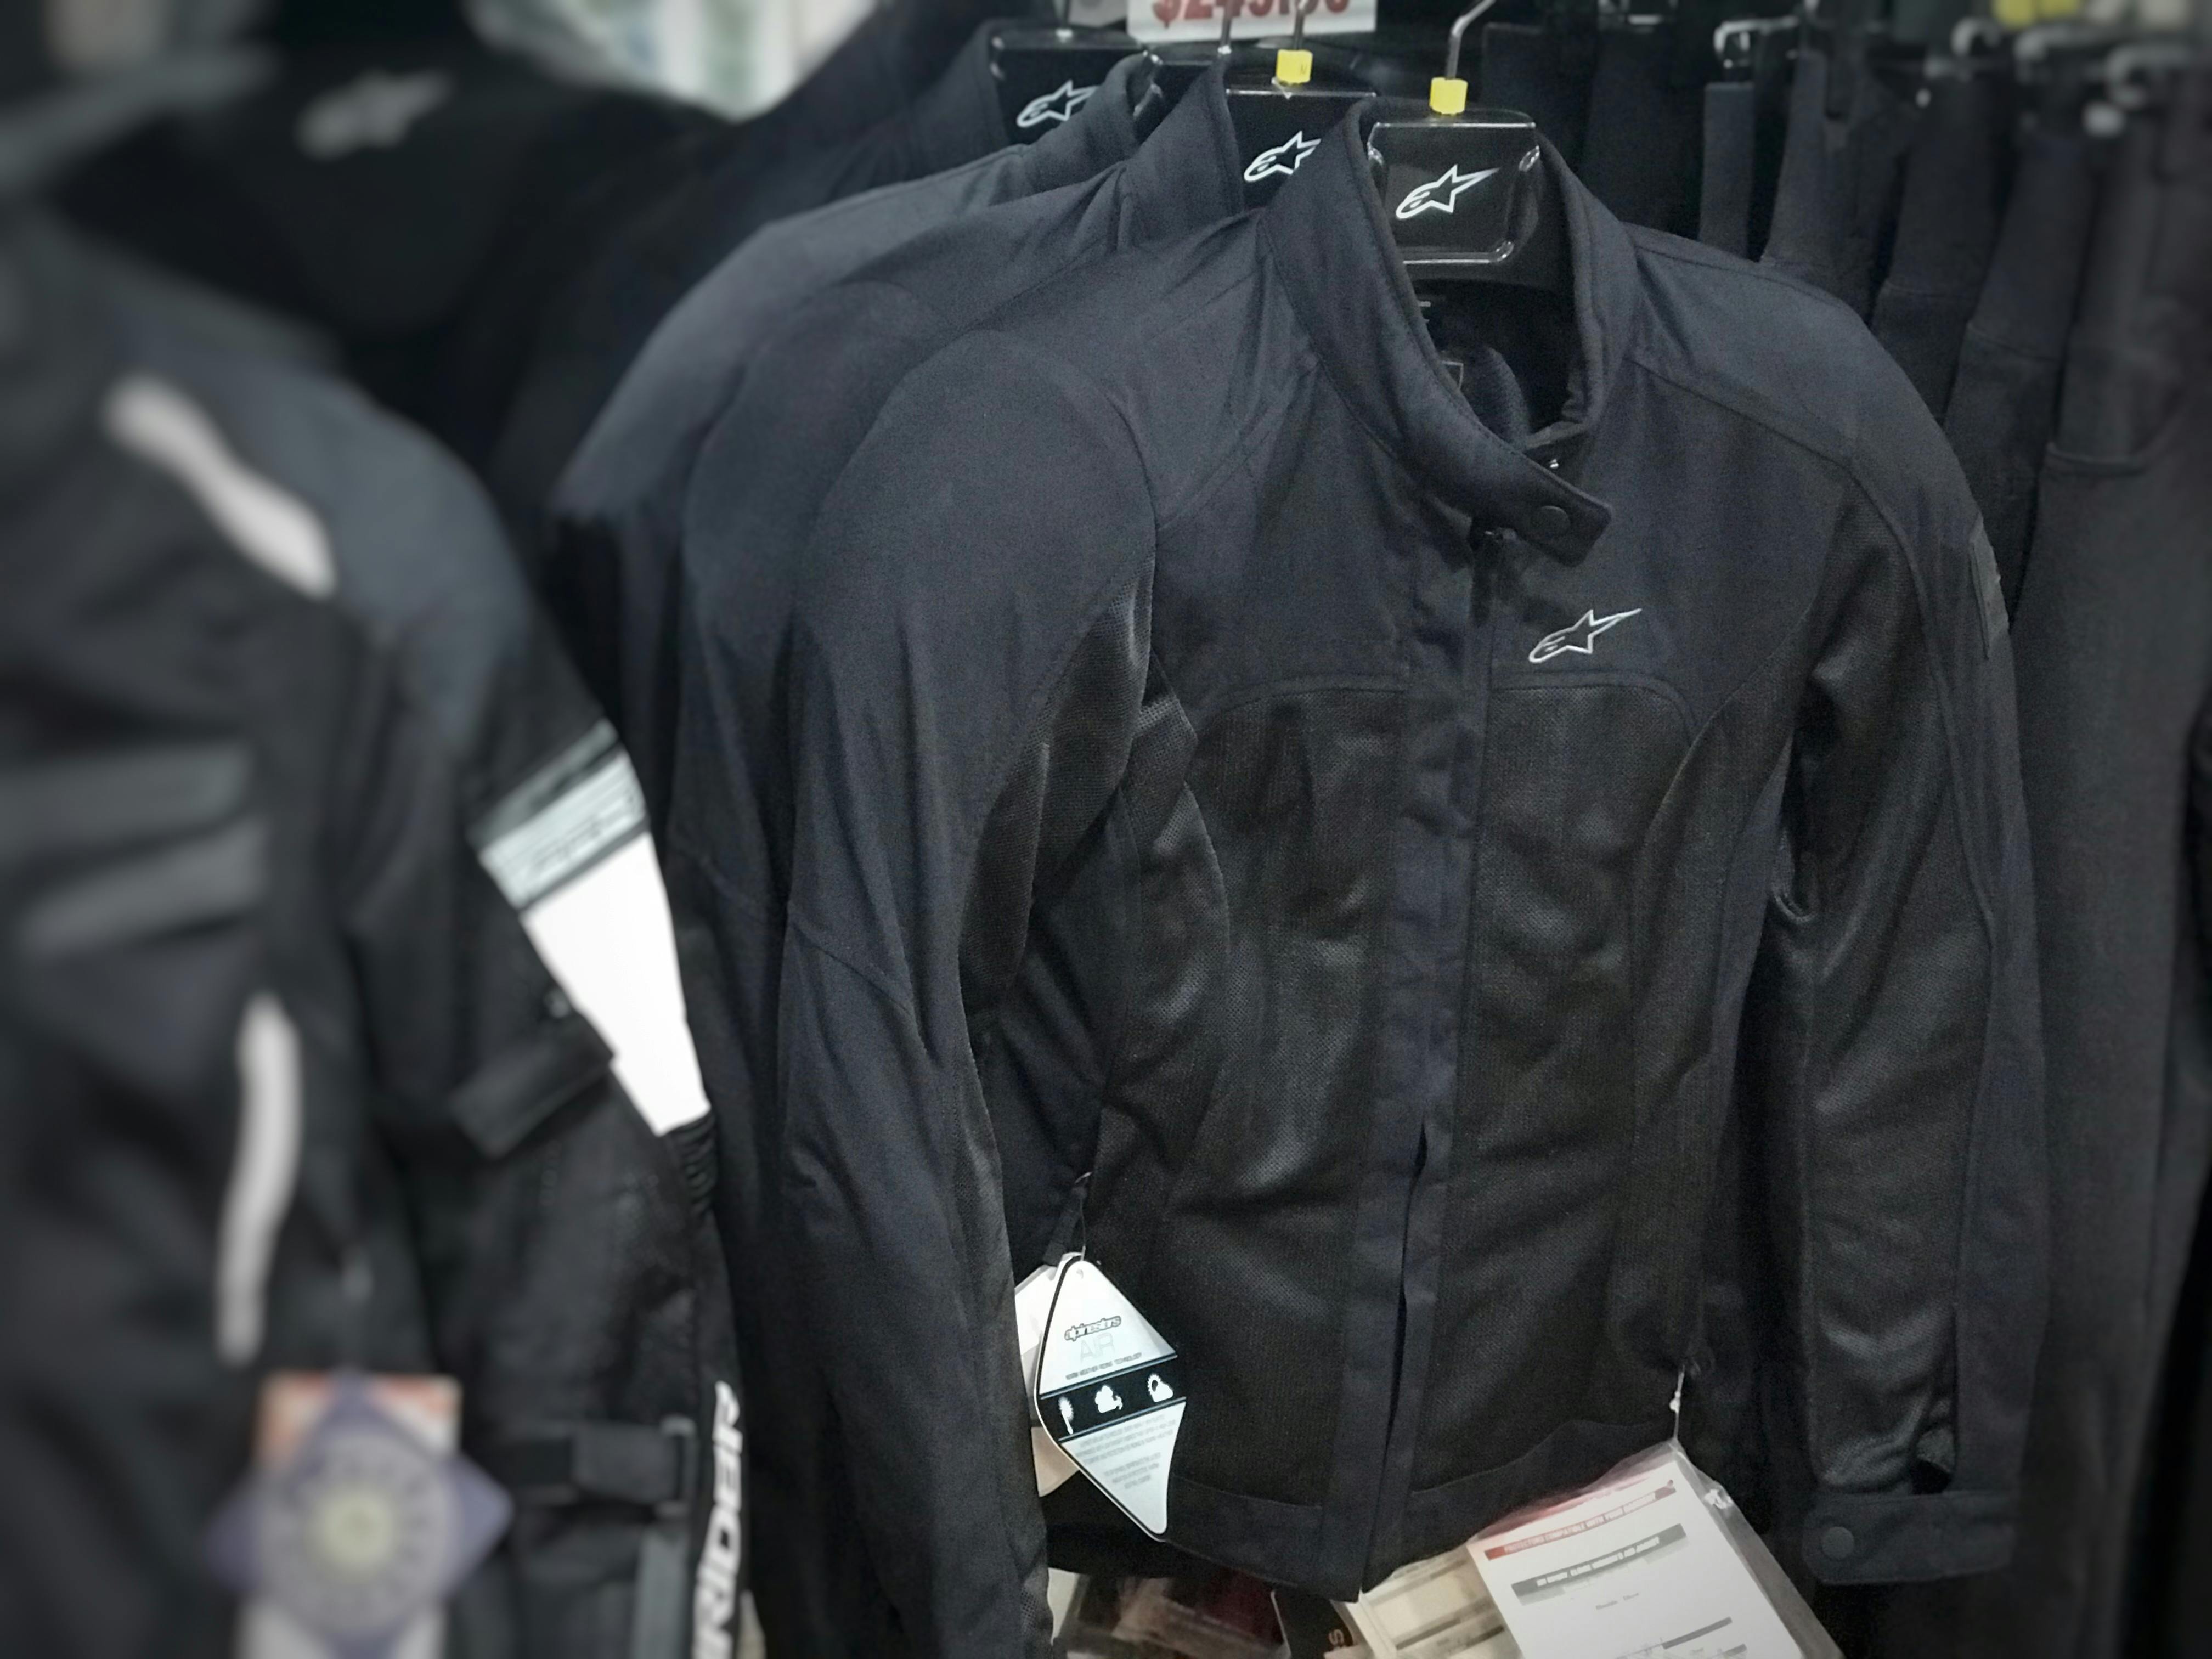 The Stella Eloise jacket in store at Bikebiz in black